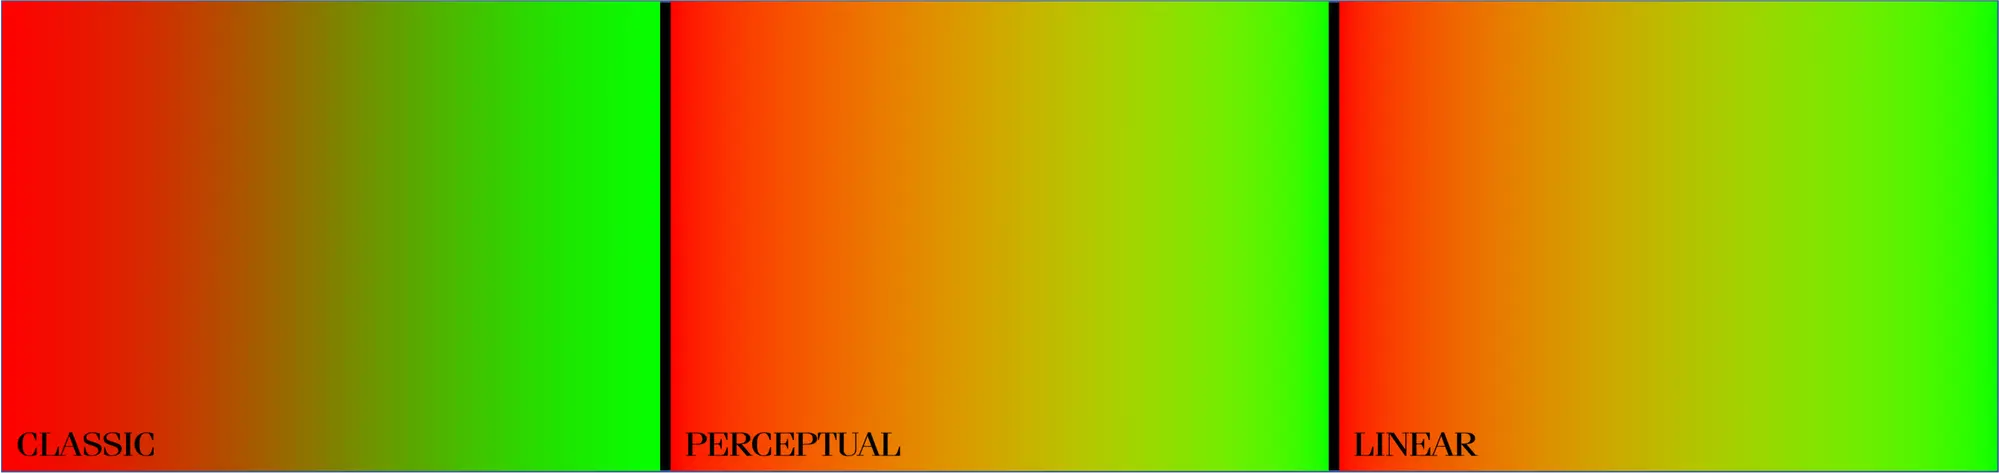 Imagem de gradientes. 